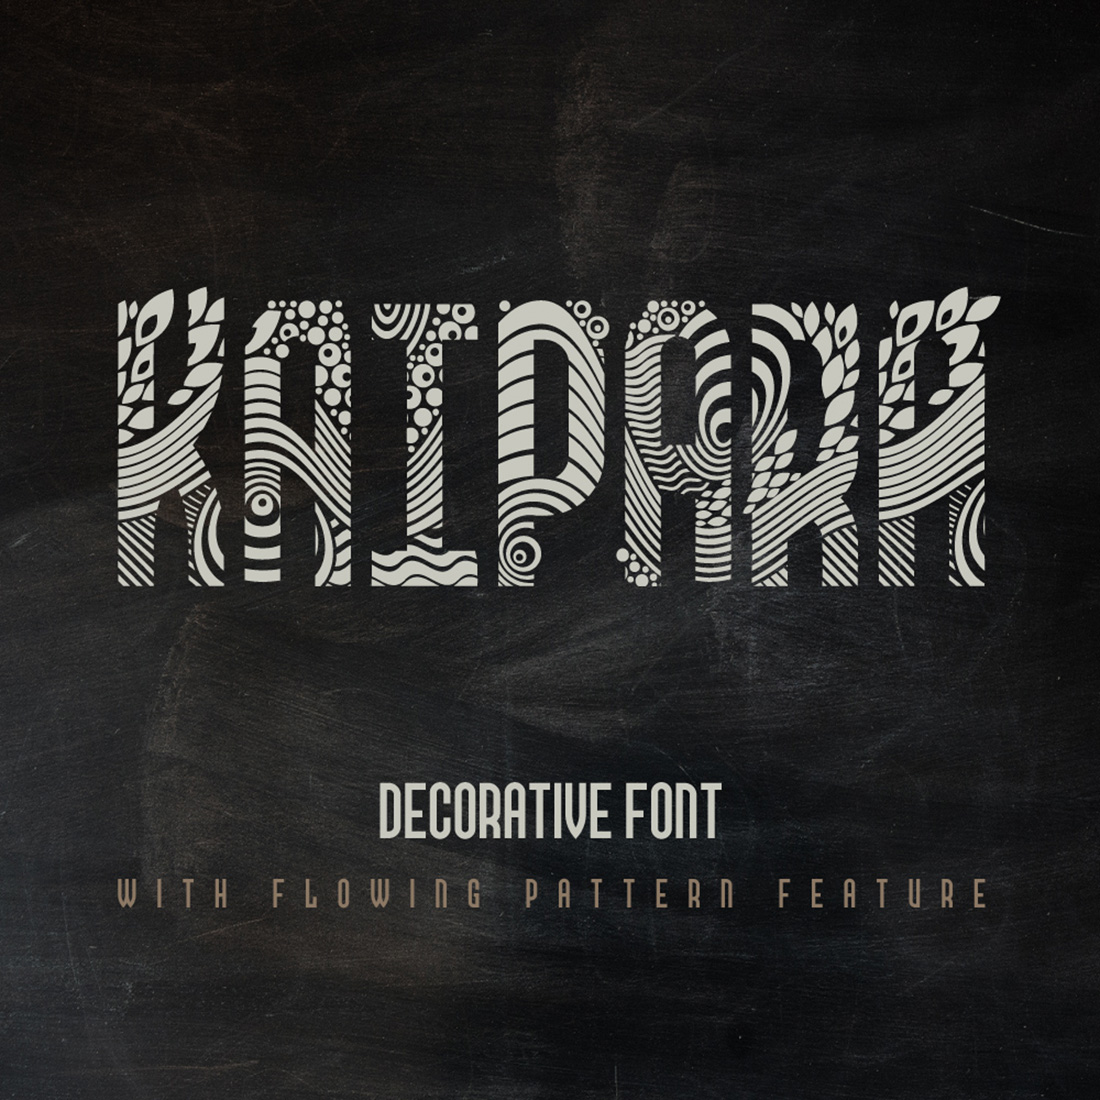 Kaipara Decorative Font cover image.